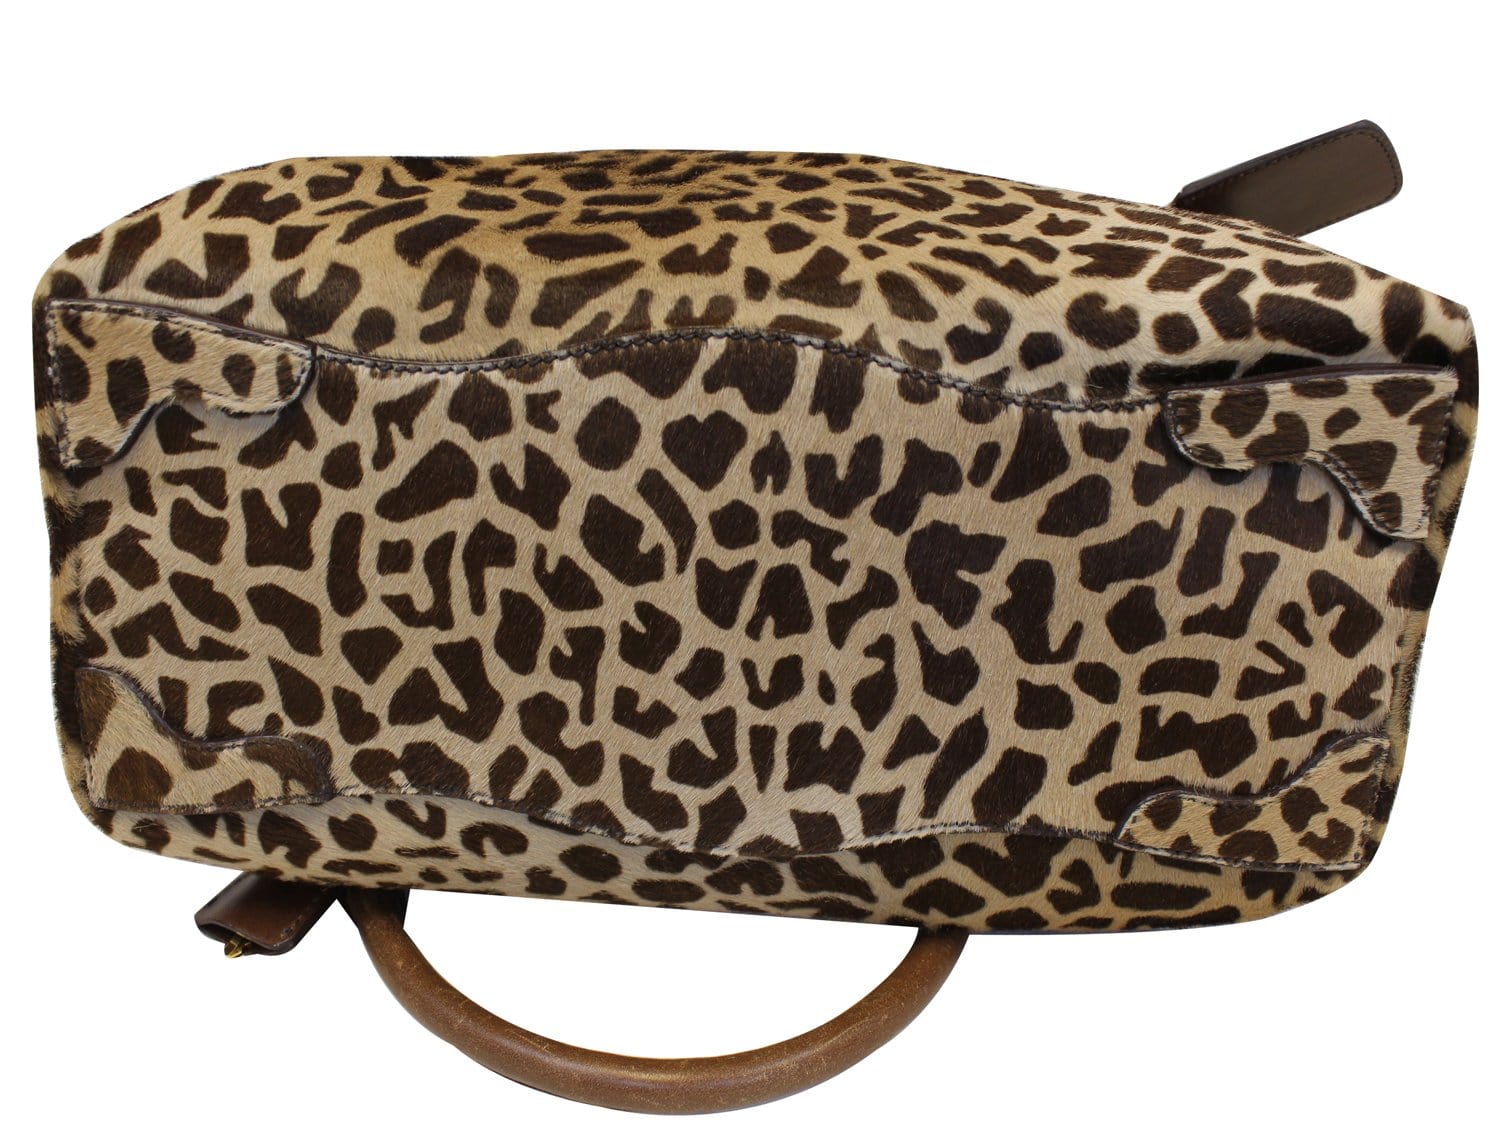 Kit Bracelet Bag in Leopard Printed Calf Hair